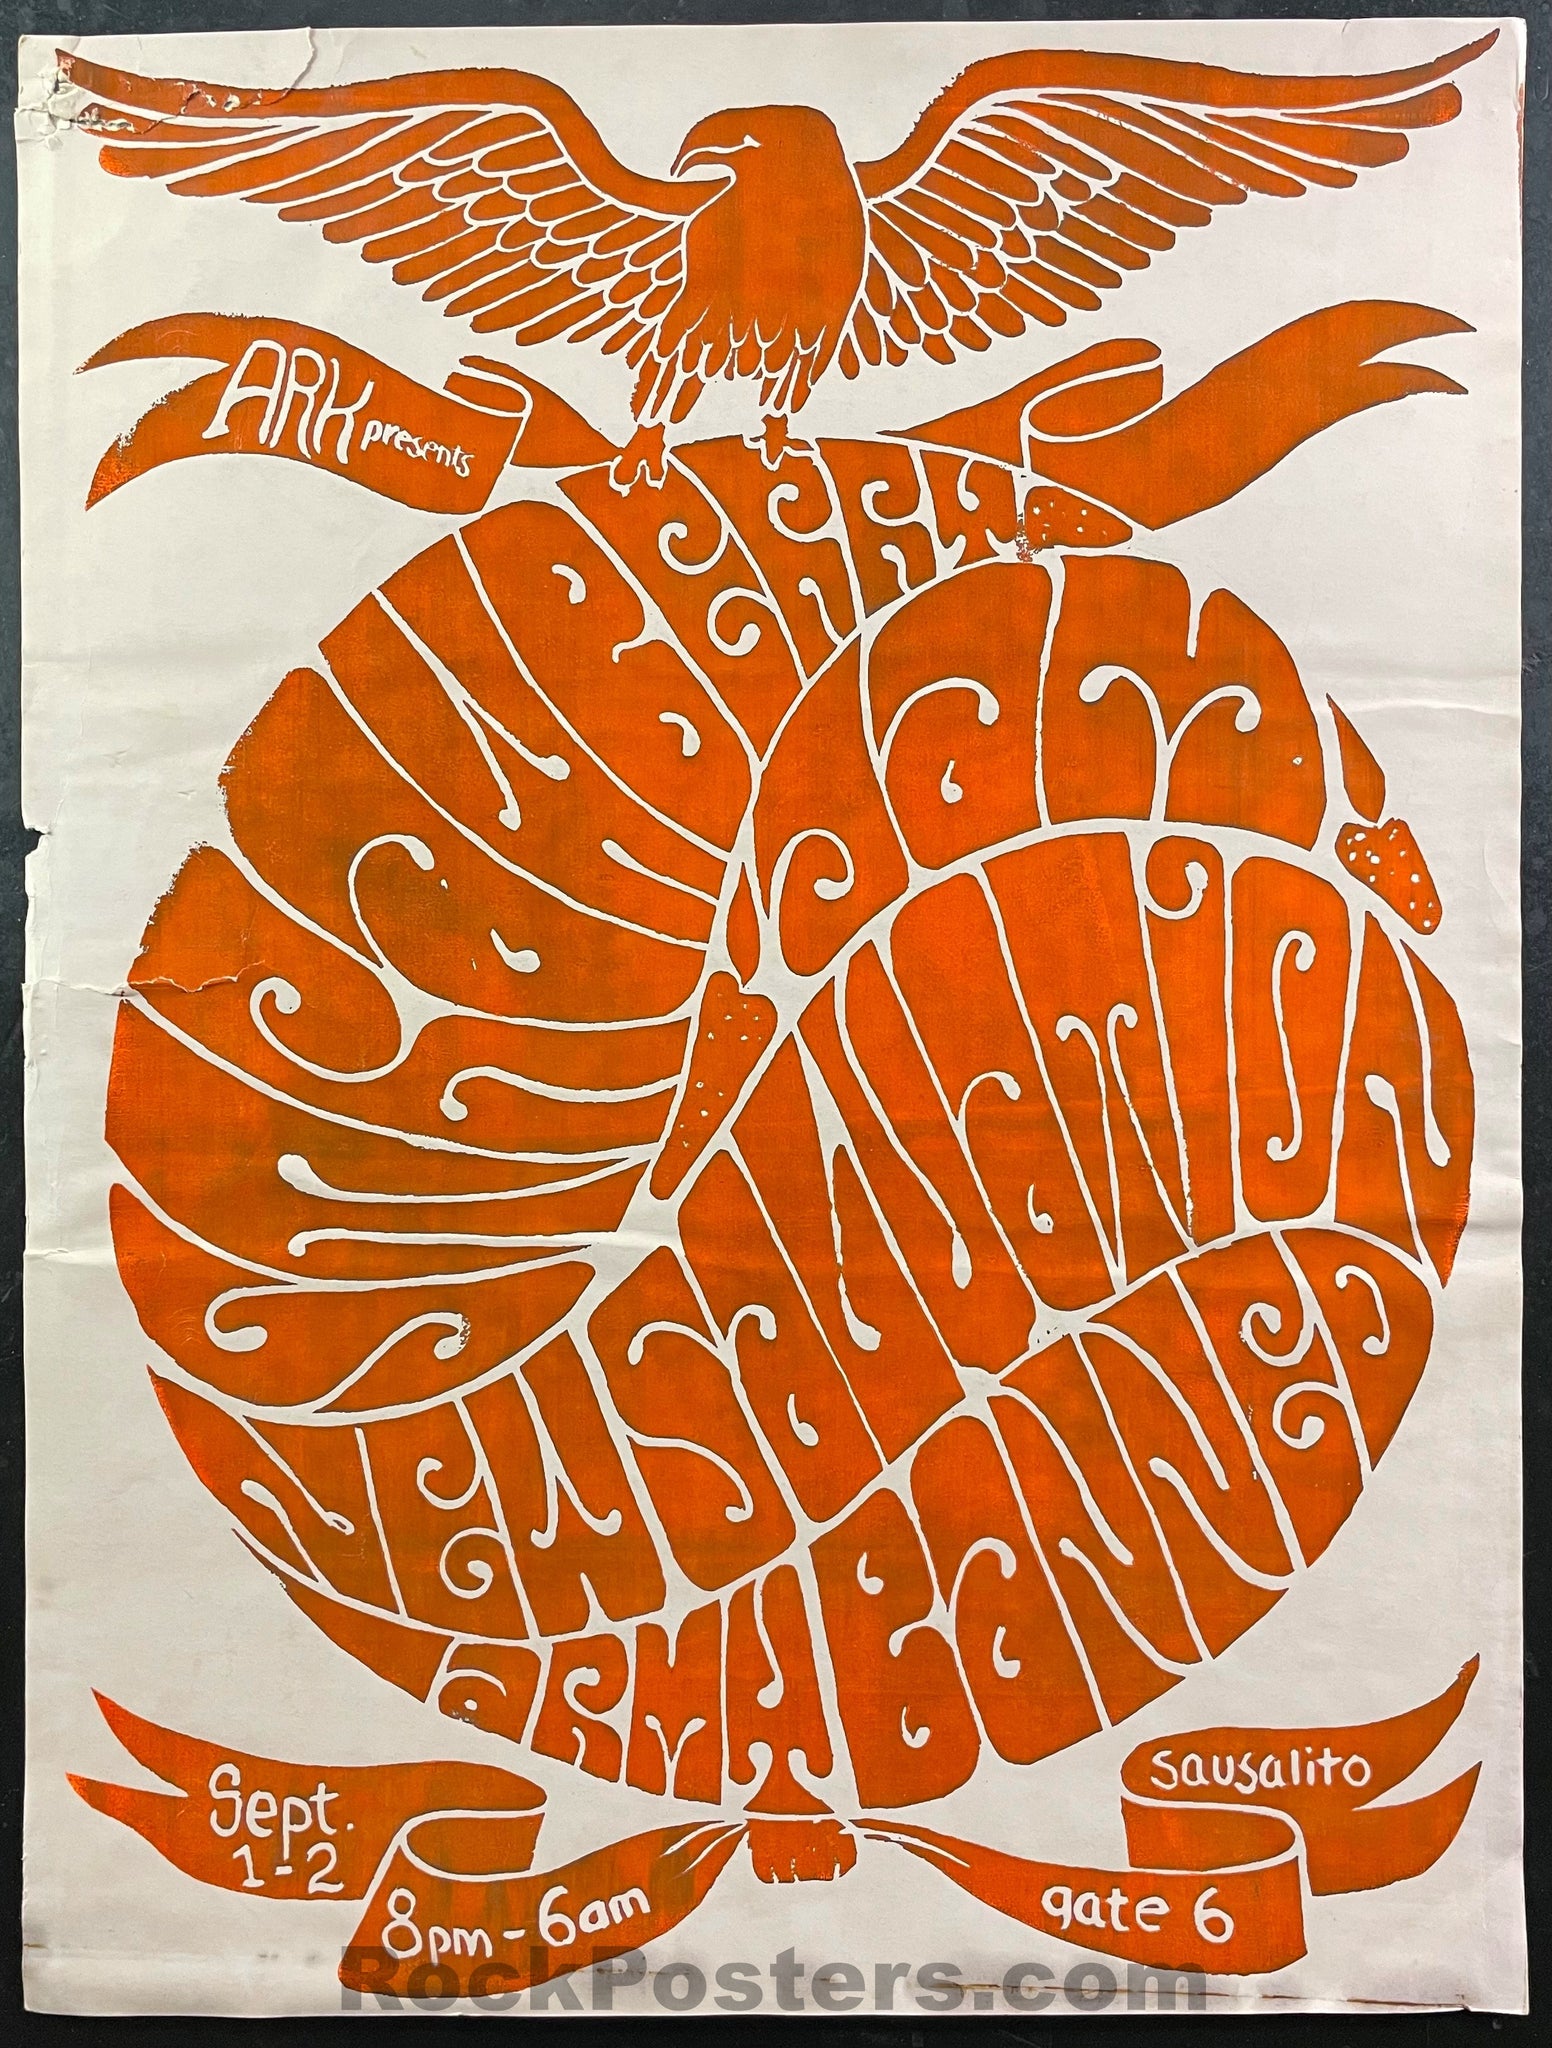 AUCTION - Strawberry Jam - 1967 Silkscreen Poster - The Ark - Sausalito - Very Good